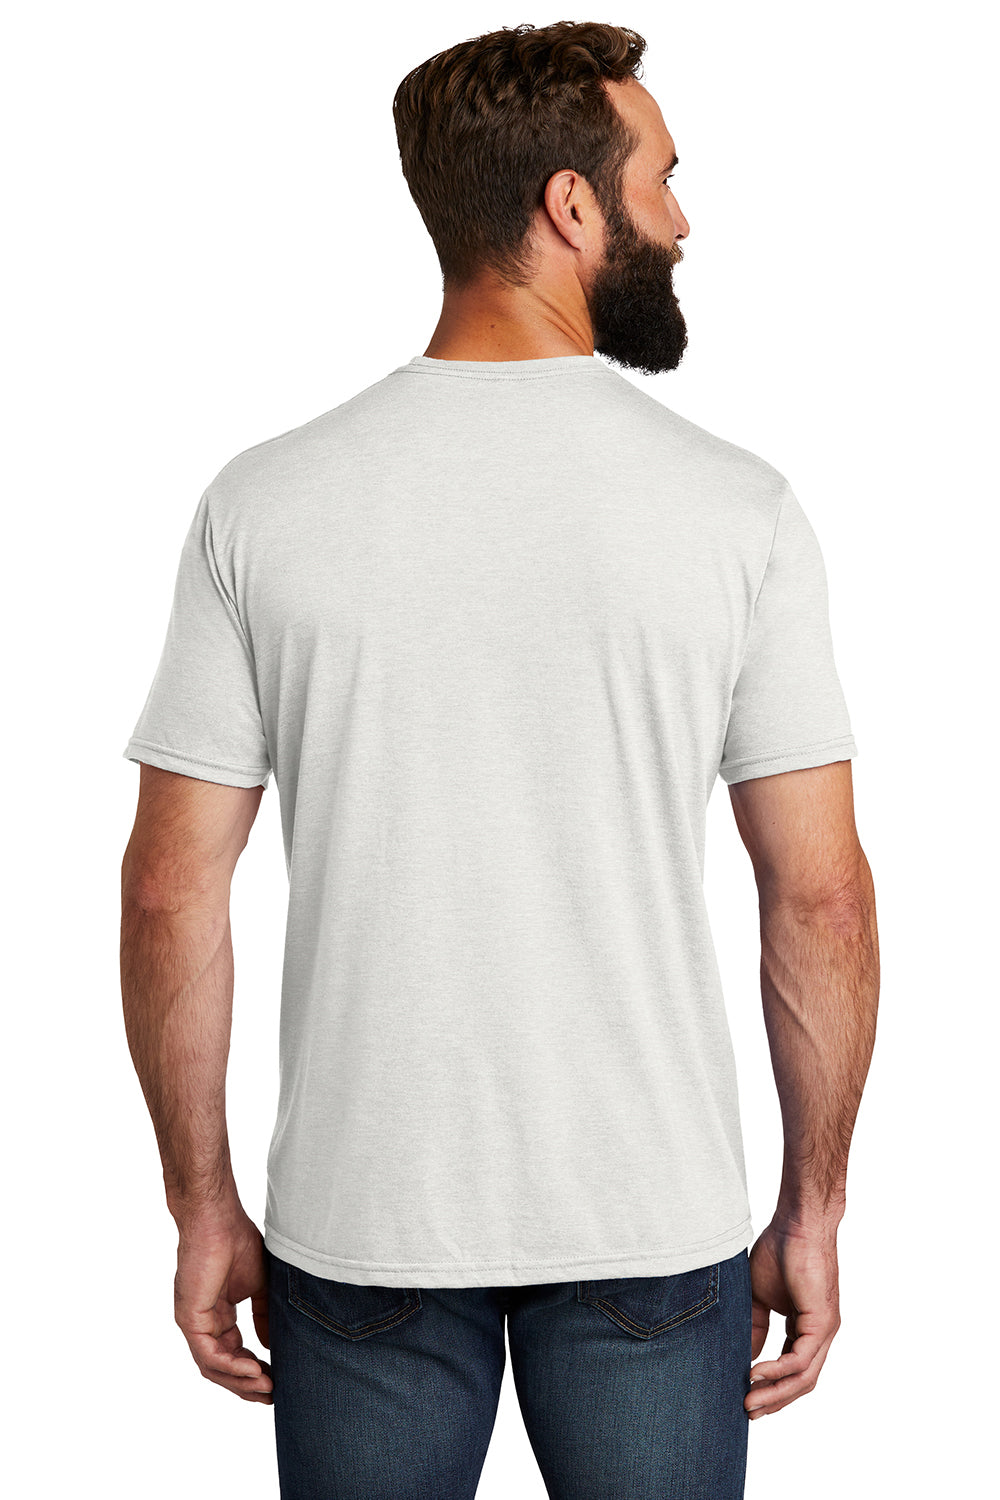 Allmade AL2004 Mens Short Sleeve Crewneck T-Shirt Fairly White Model Back